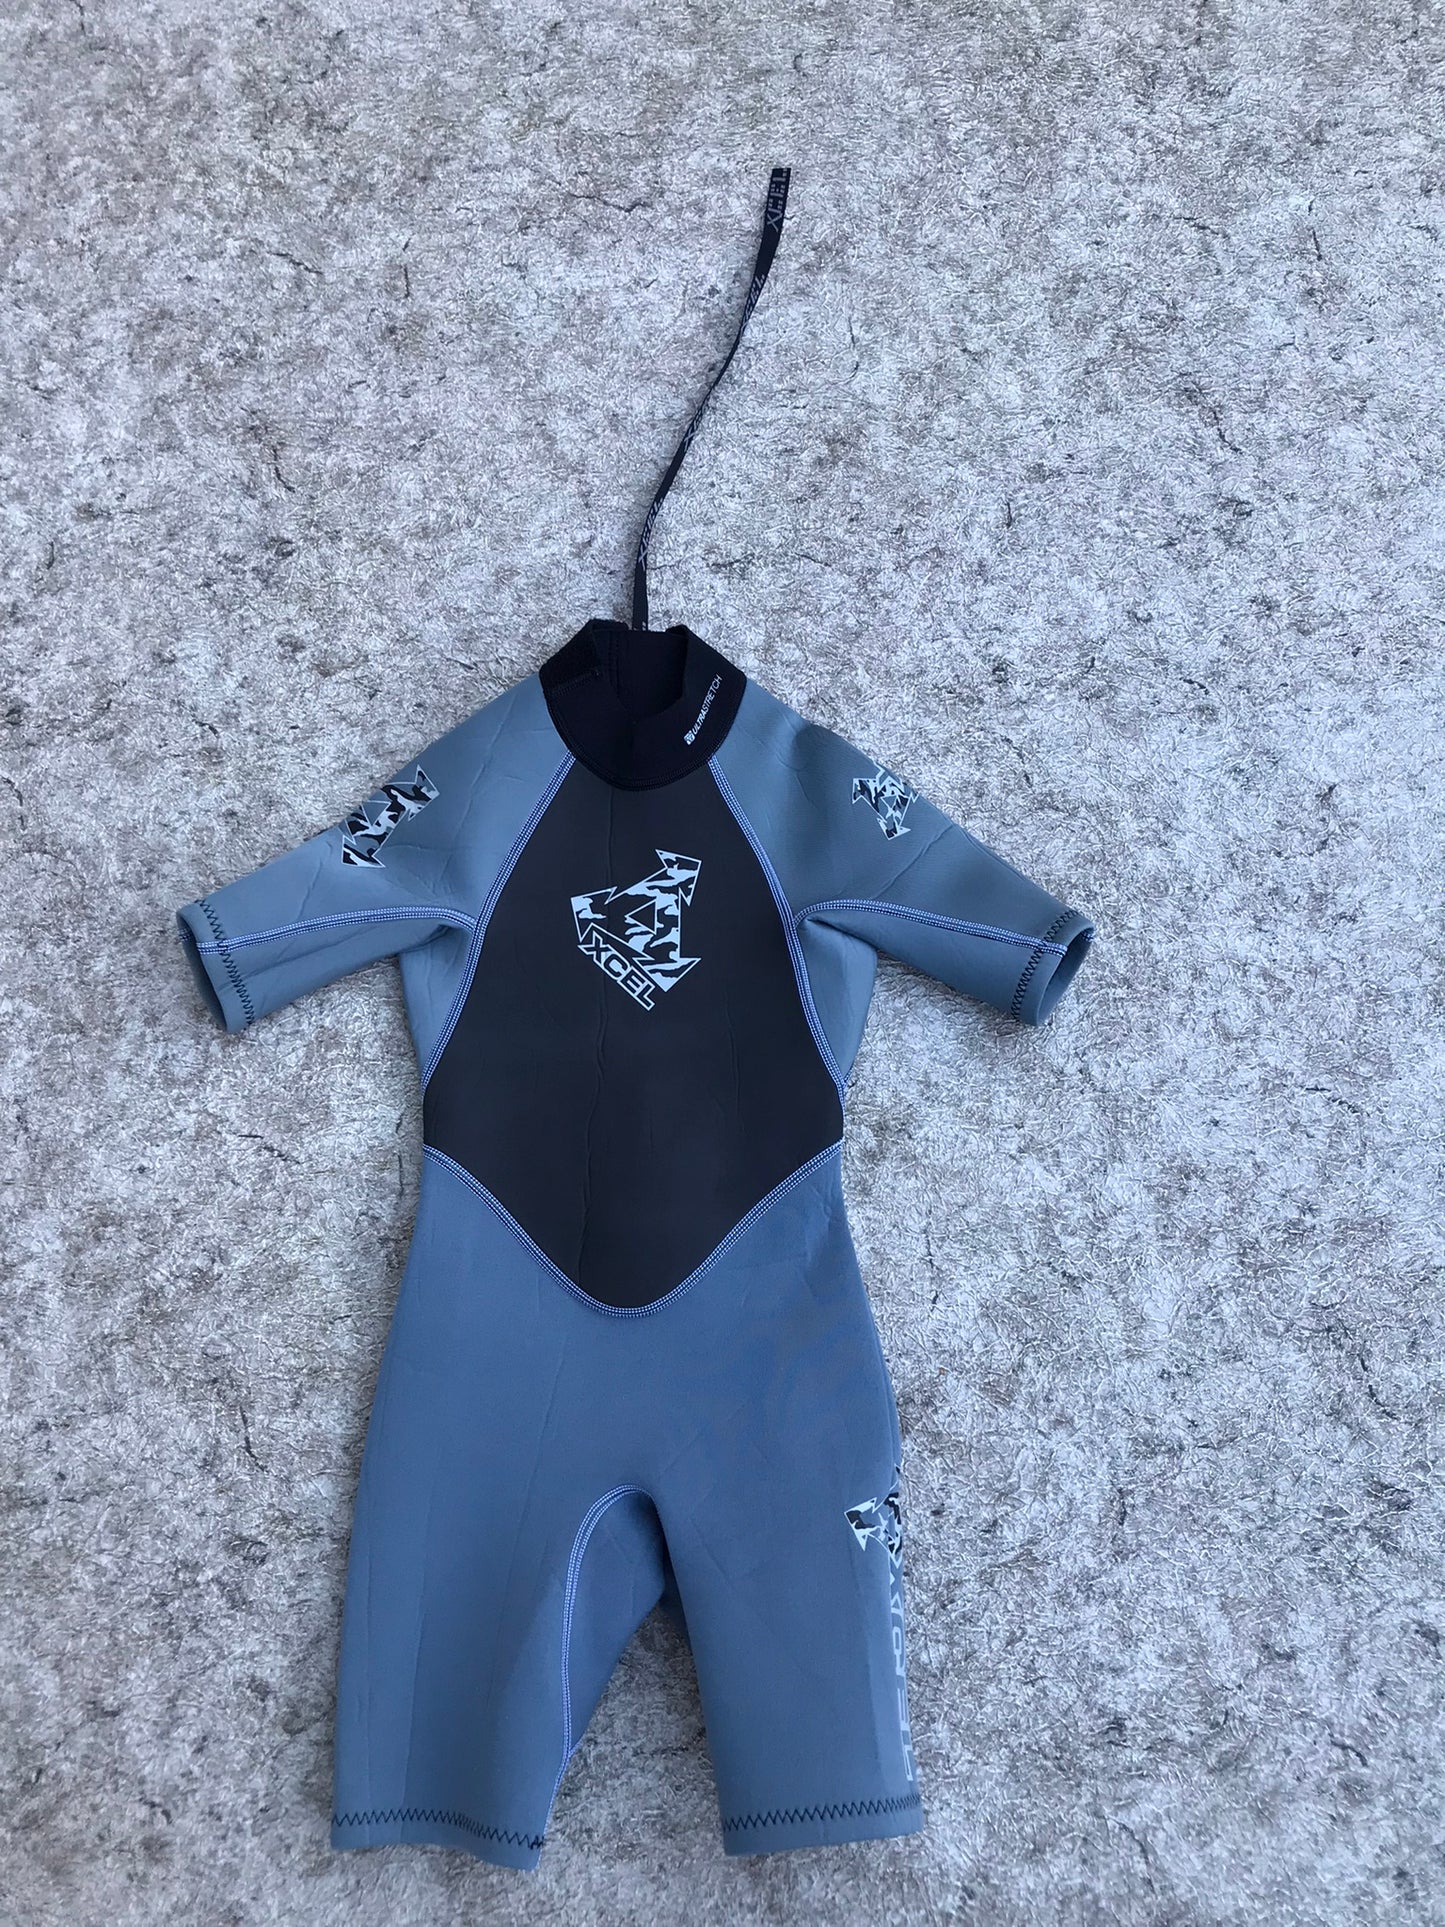 Wetsuit Child Size 6 Excel Grey Black 2-3 mm  Excellent